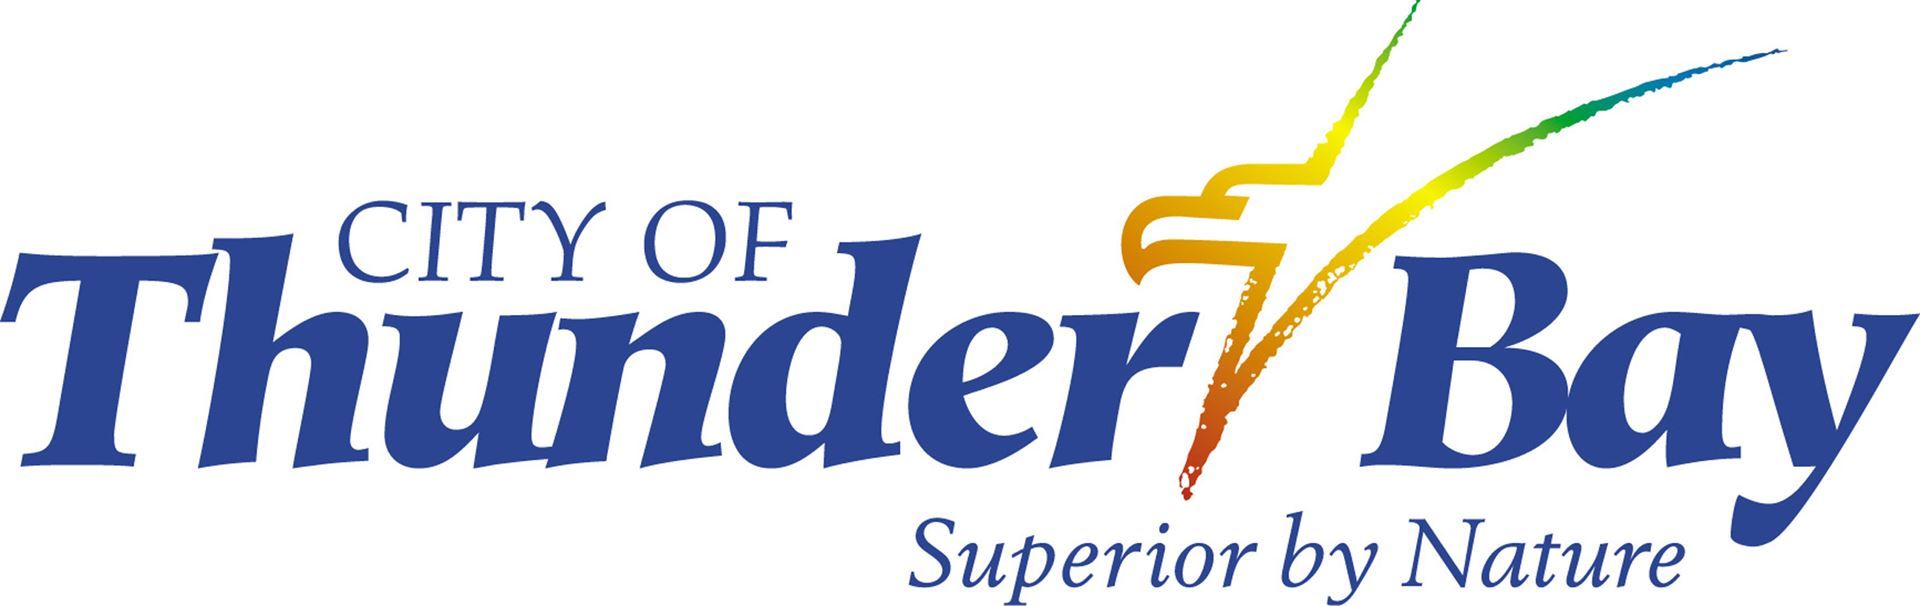 City of Thunder Bay Superior by Nature logo